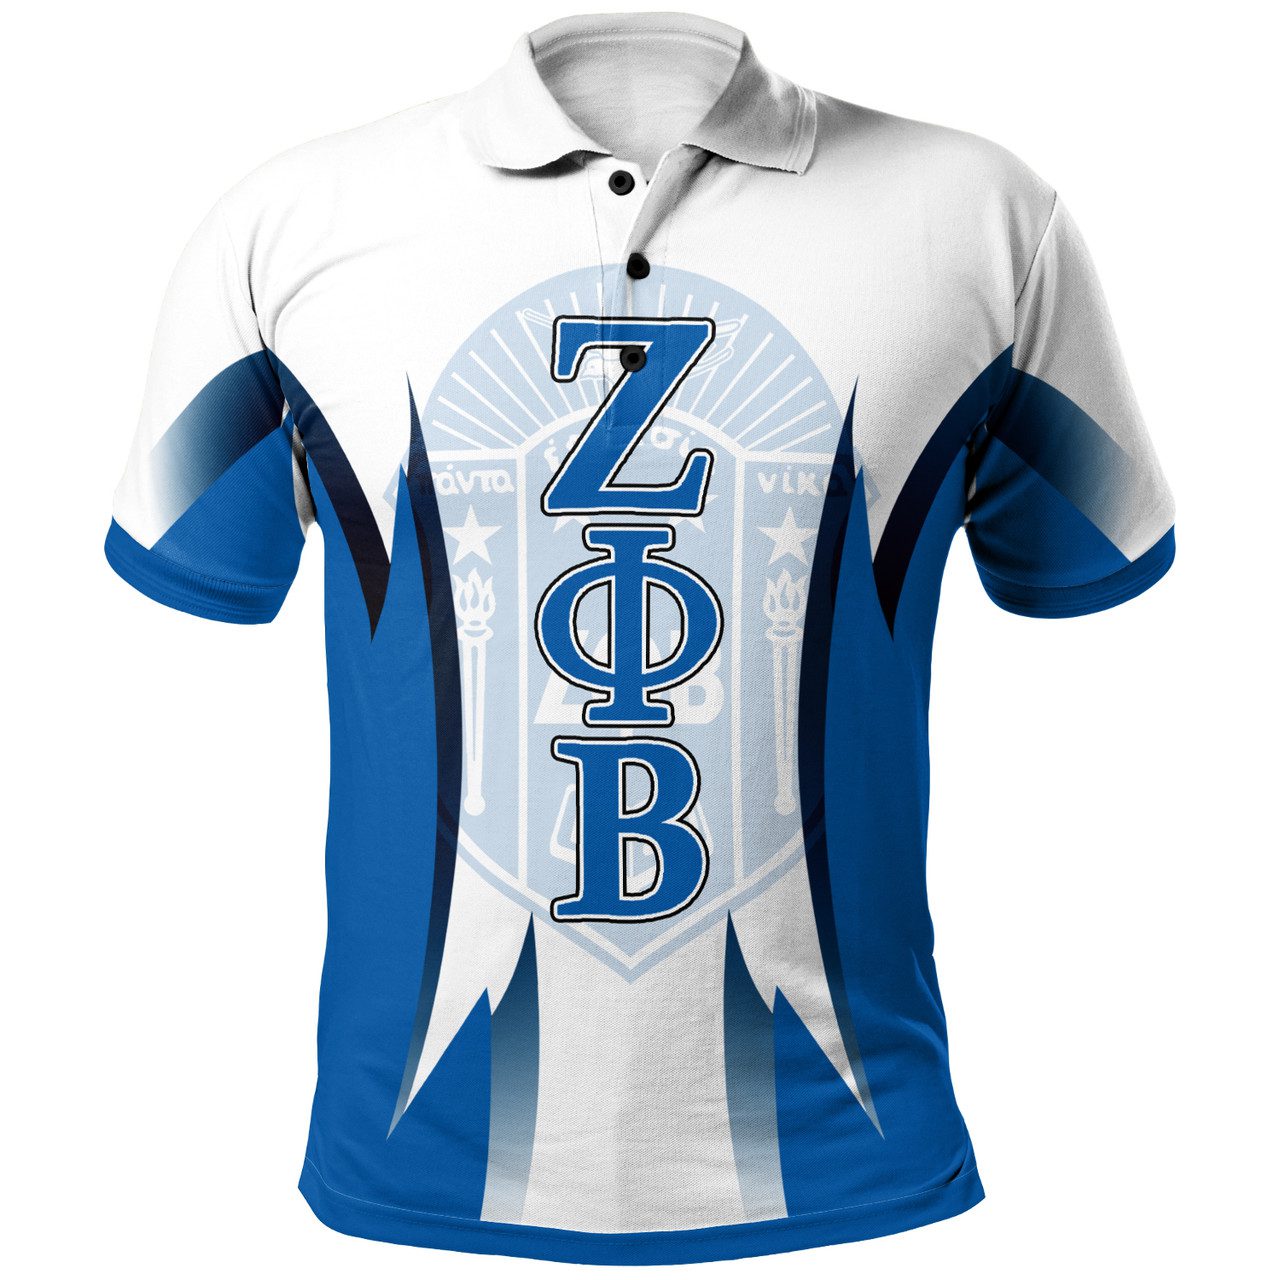 Zeta Phi Beta Polo Shirt – Sorority Limited Version Polo Shirt